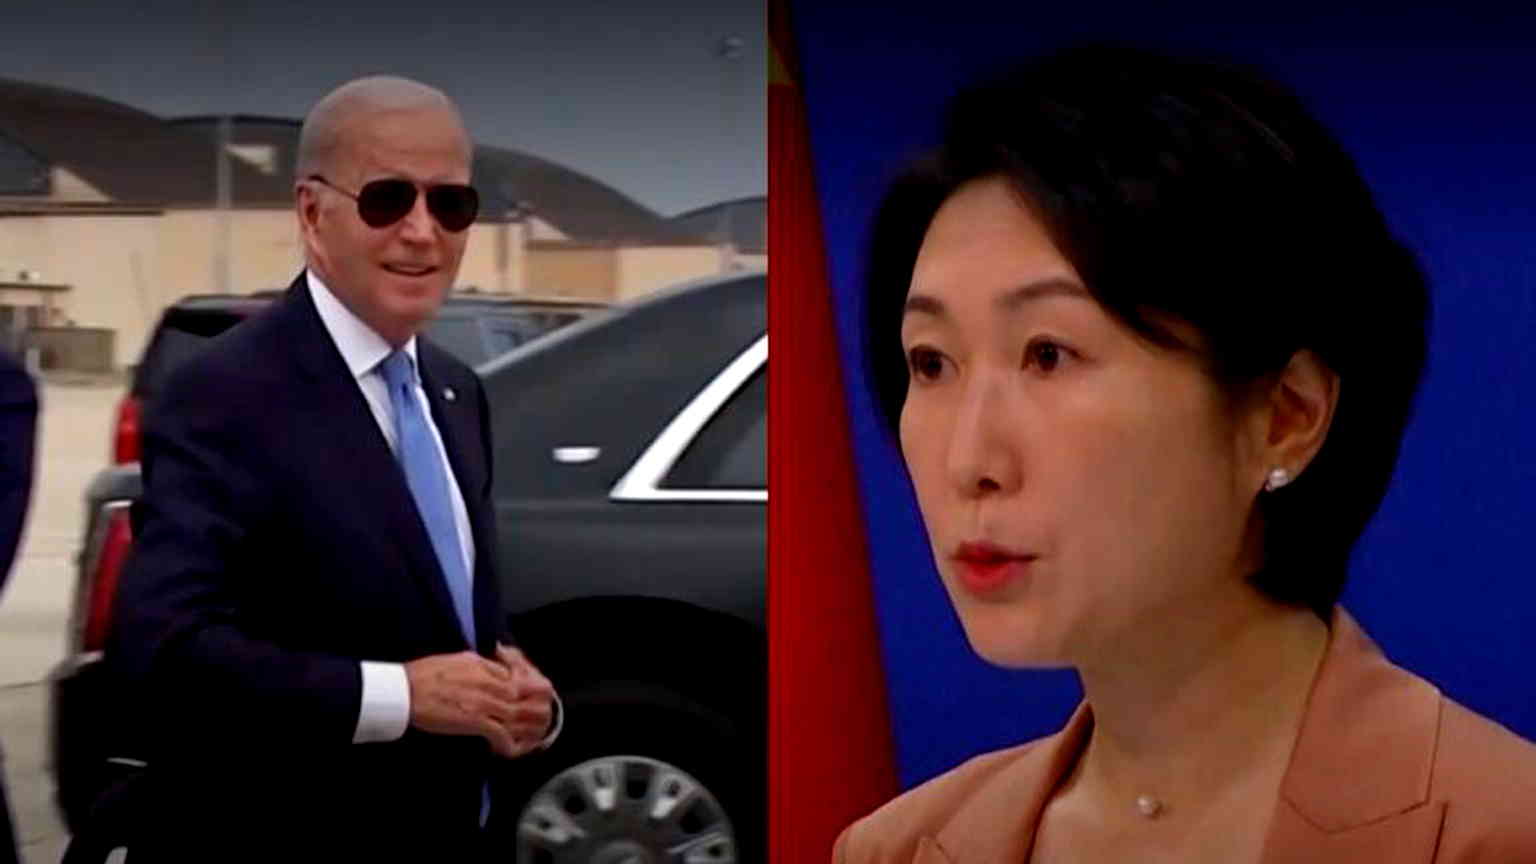 ‘Extremely absurd’: China responds after Biden calls Xi Jinping a ‘dictator’